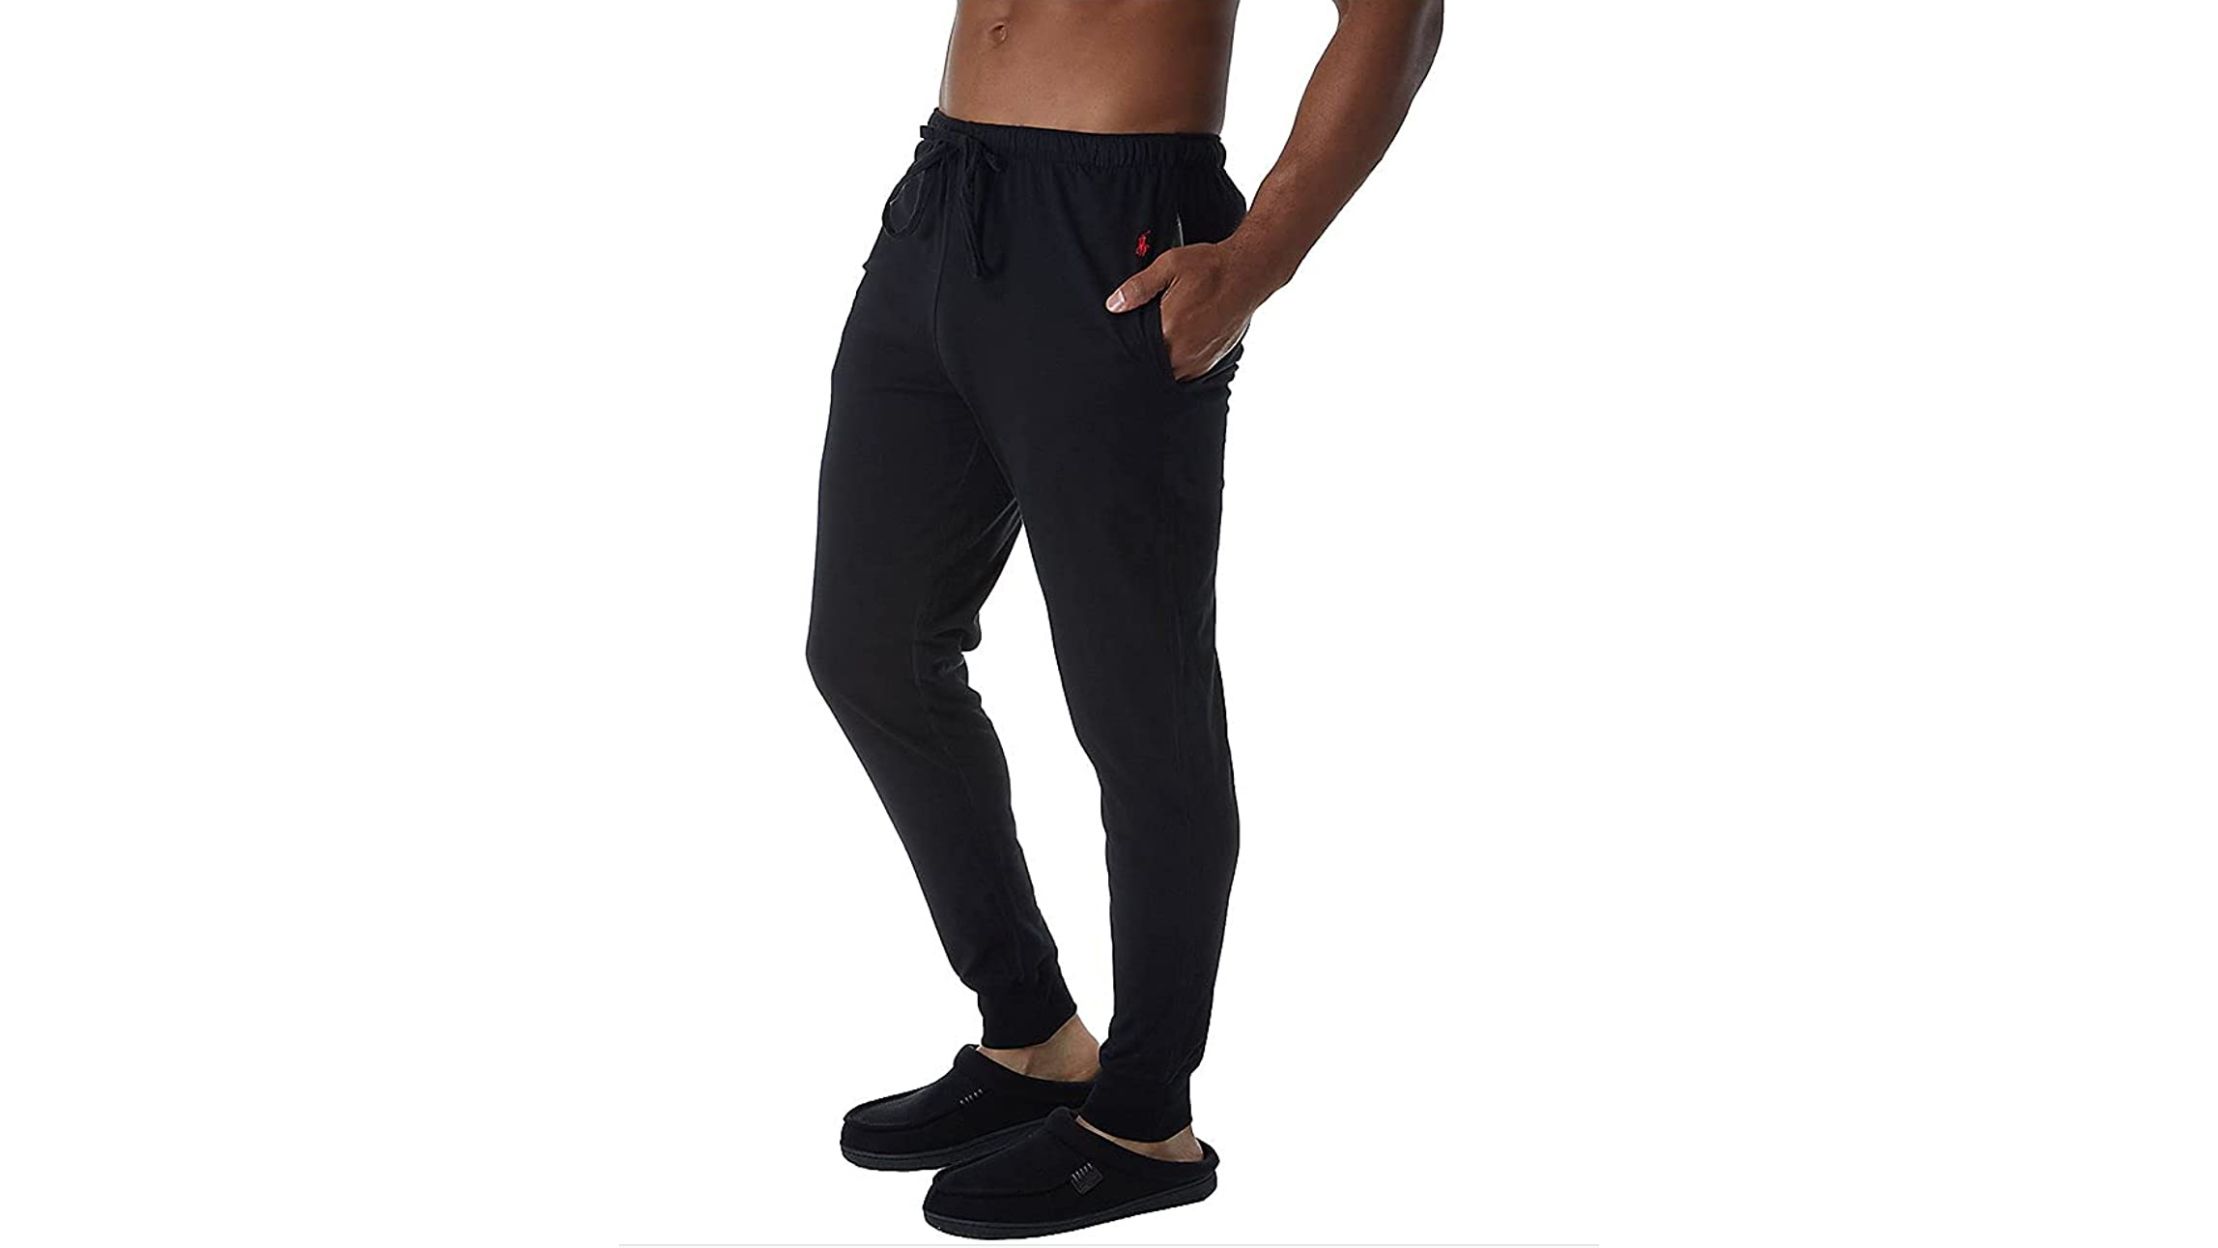 Agnes Urban Mens Yoga Sweatpants Workout Joggers Pants Loose Drawstrings Casual Cotton Lounge Pajama Pants with Pockets 